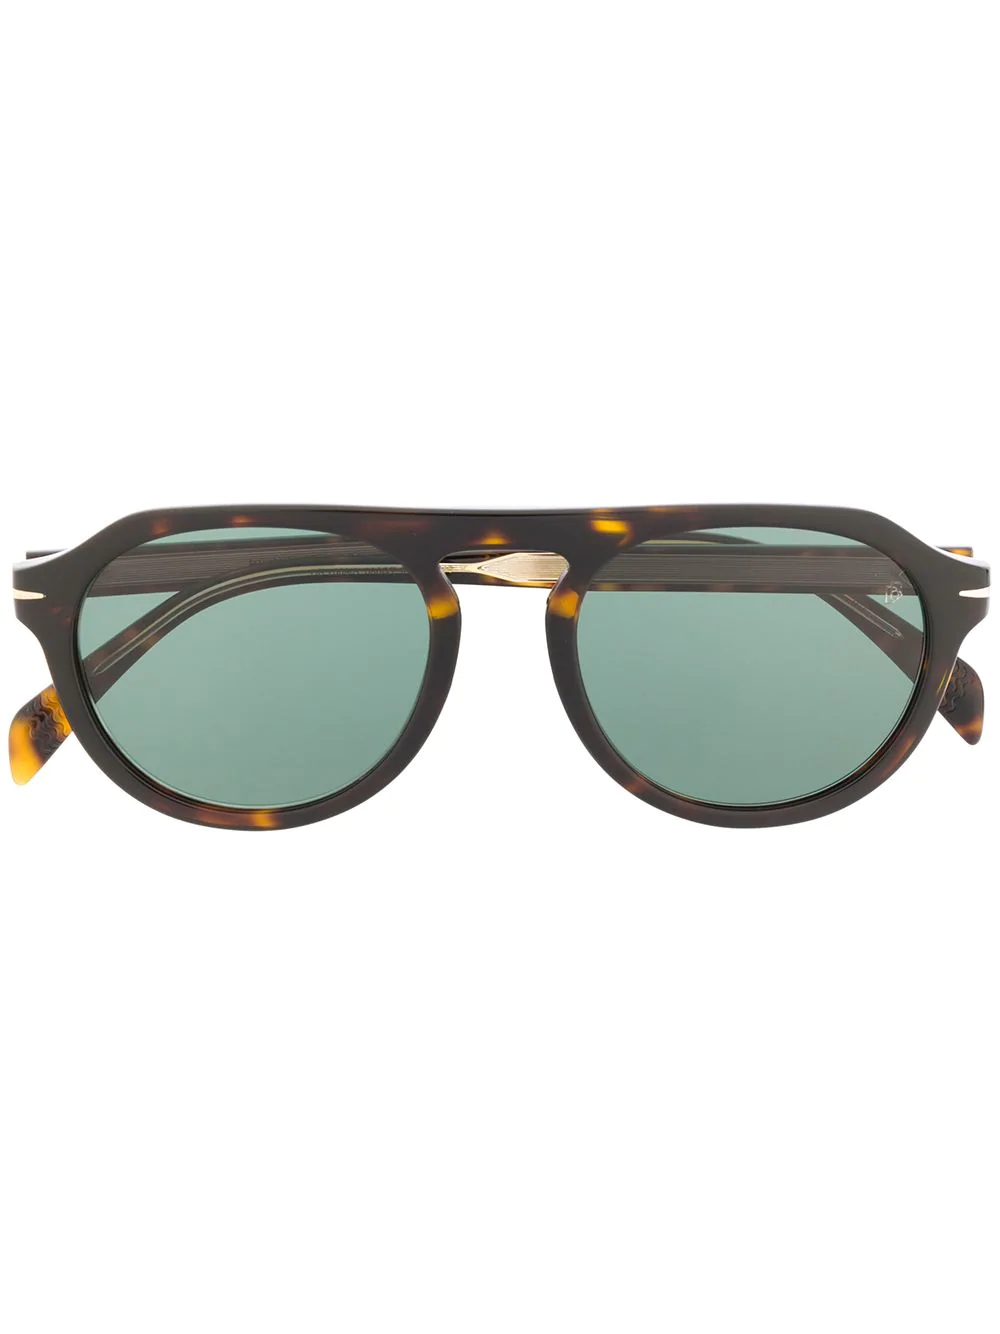 David Beckham Eyewear Tortoiseshell Round-Frame Sunglasses